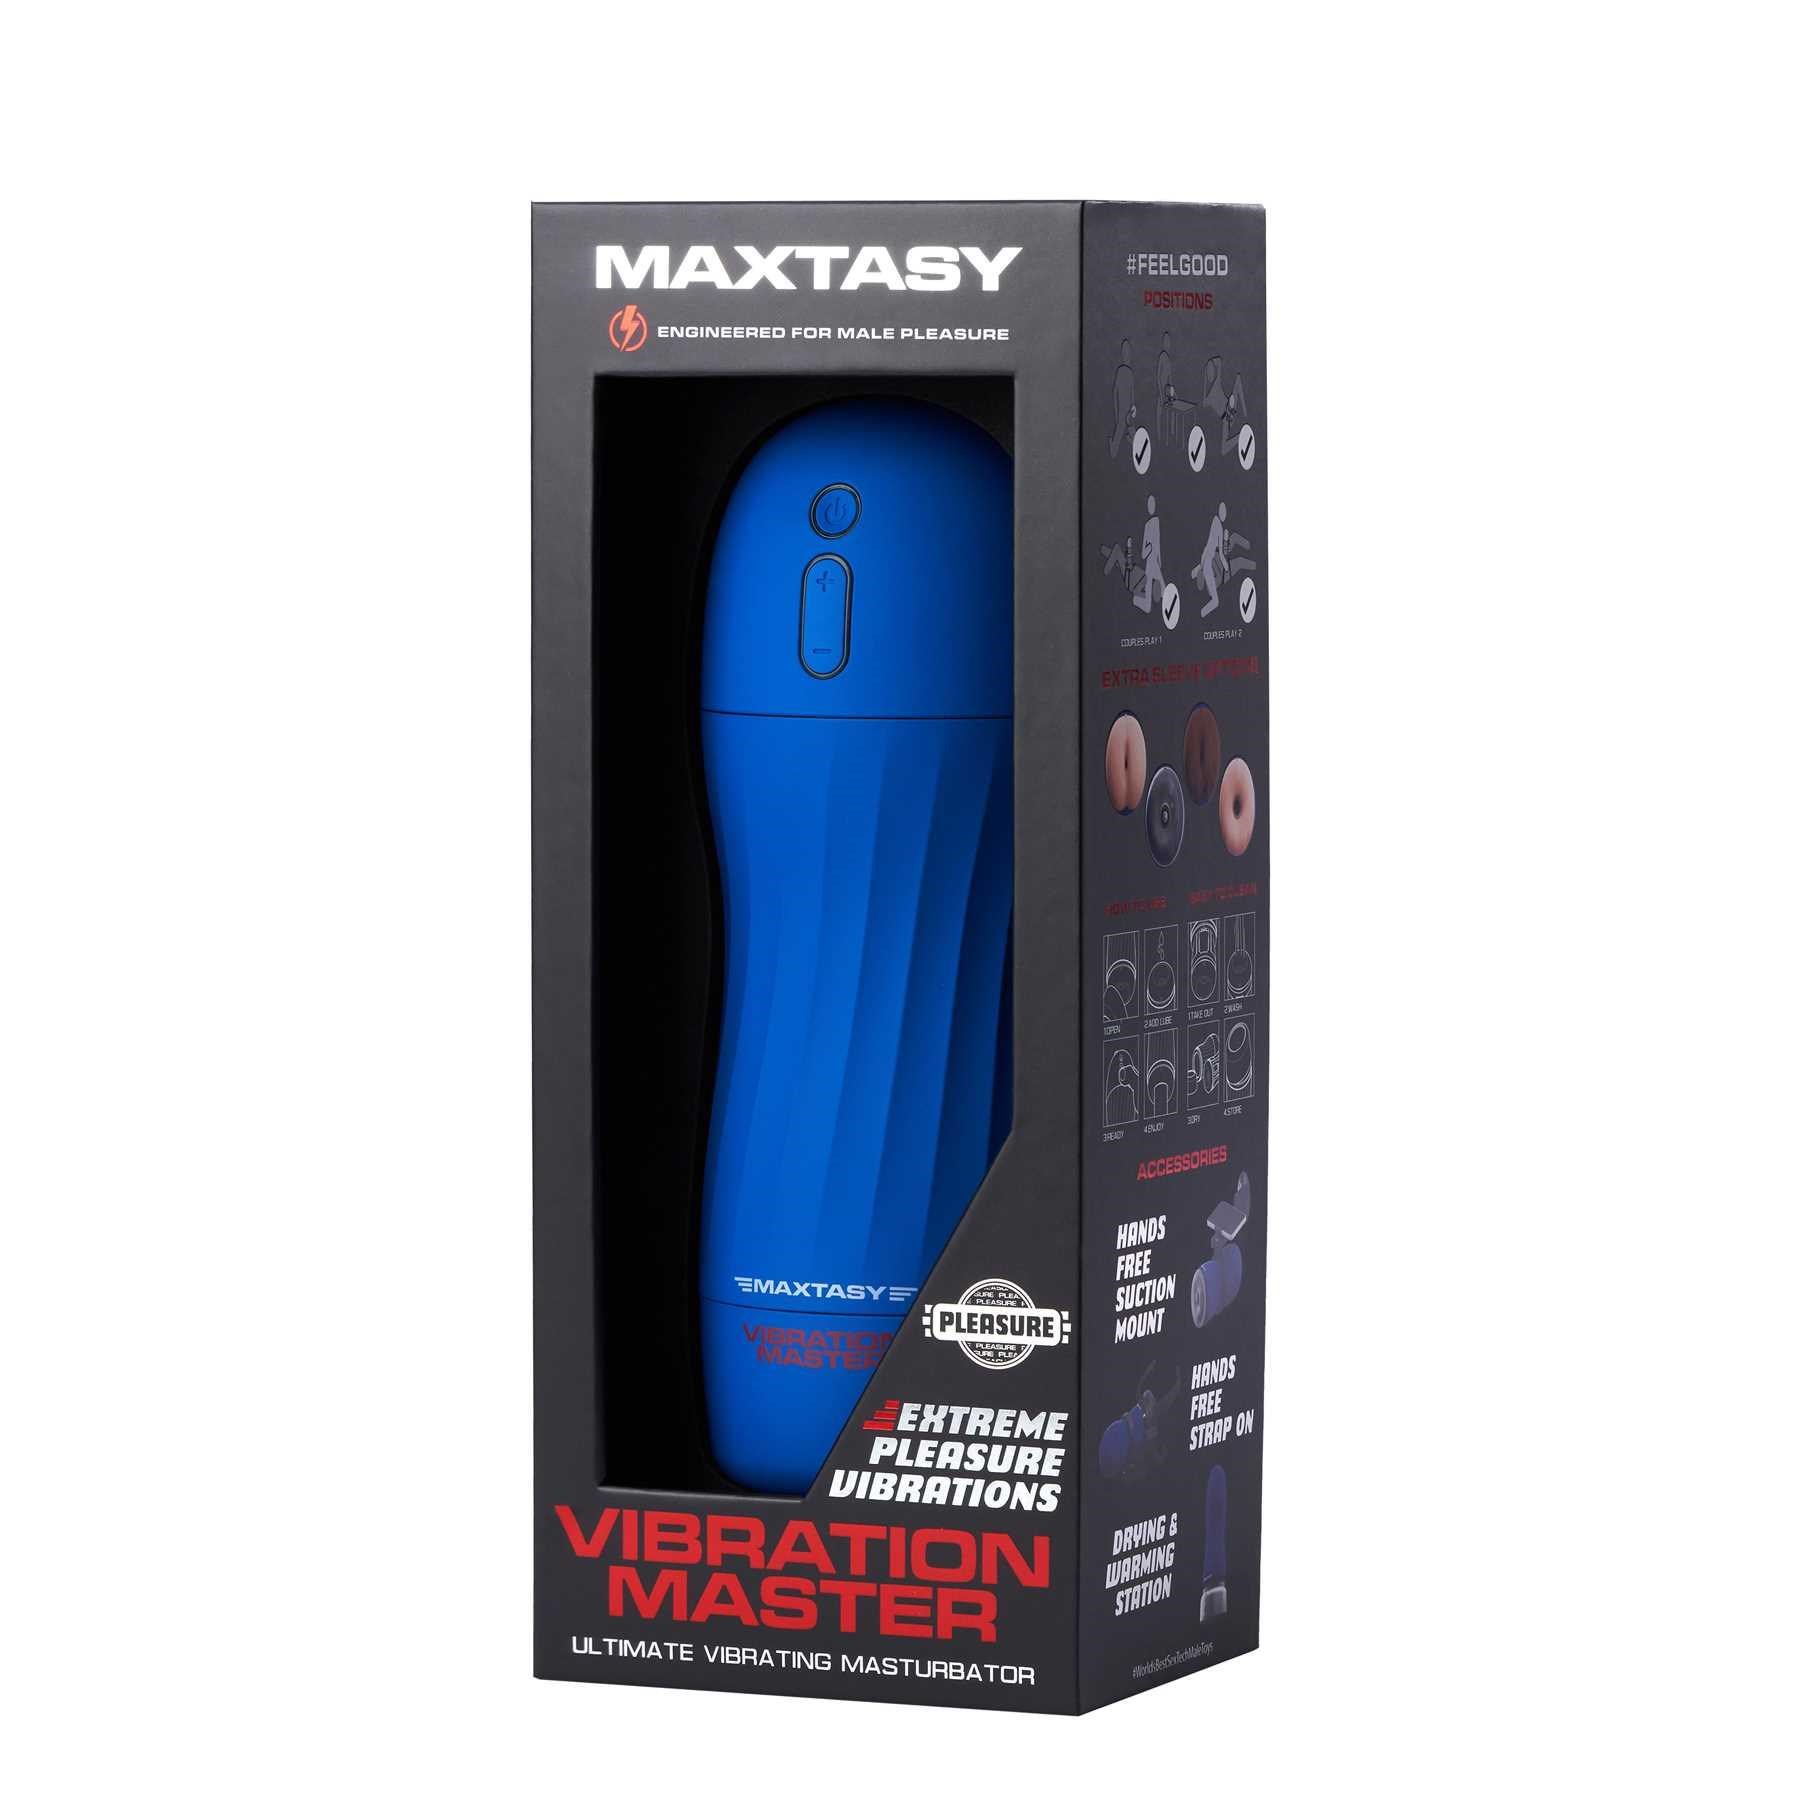 Maxtasy Vibration Master Stroker box